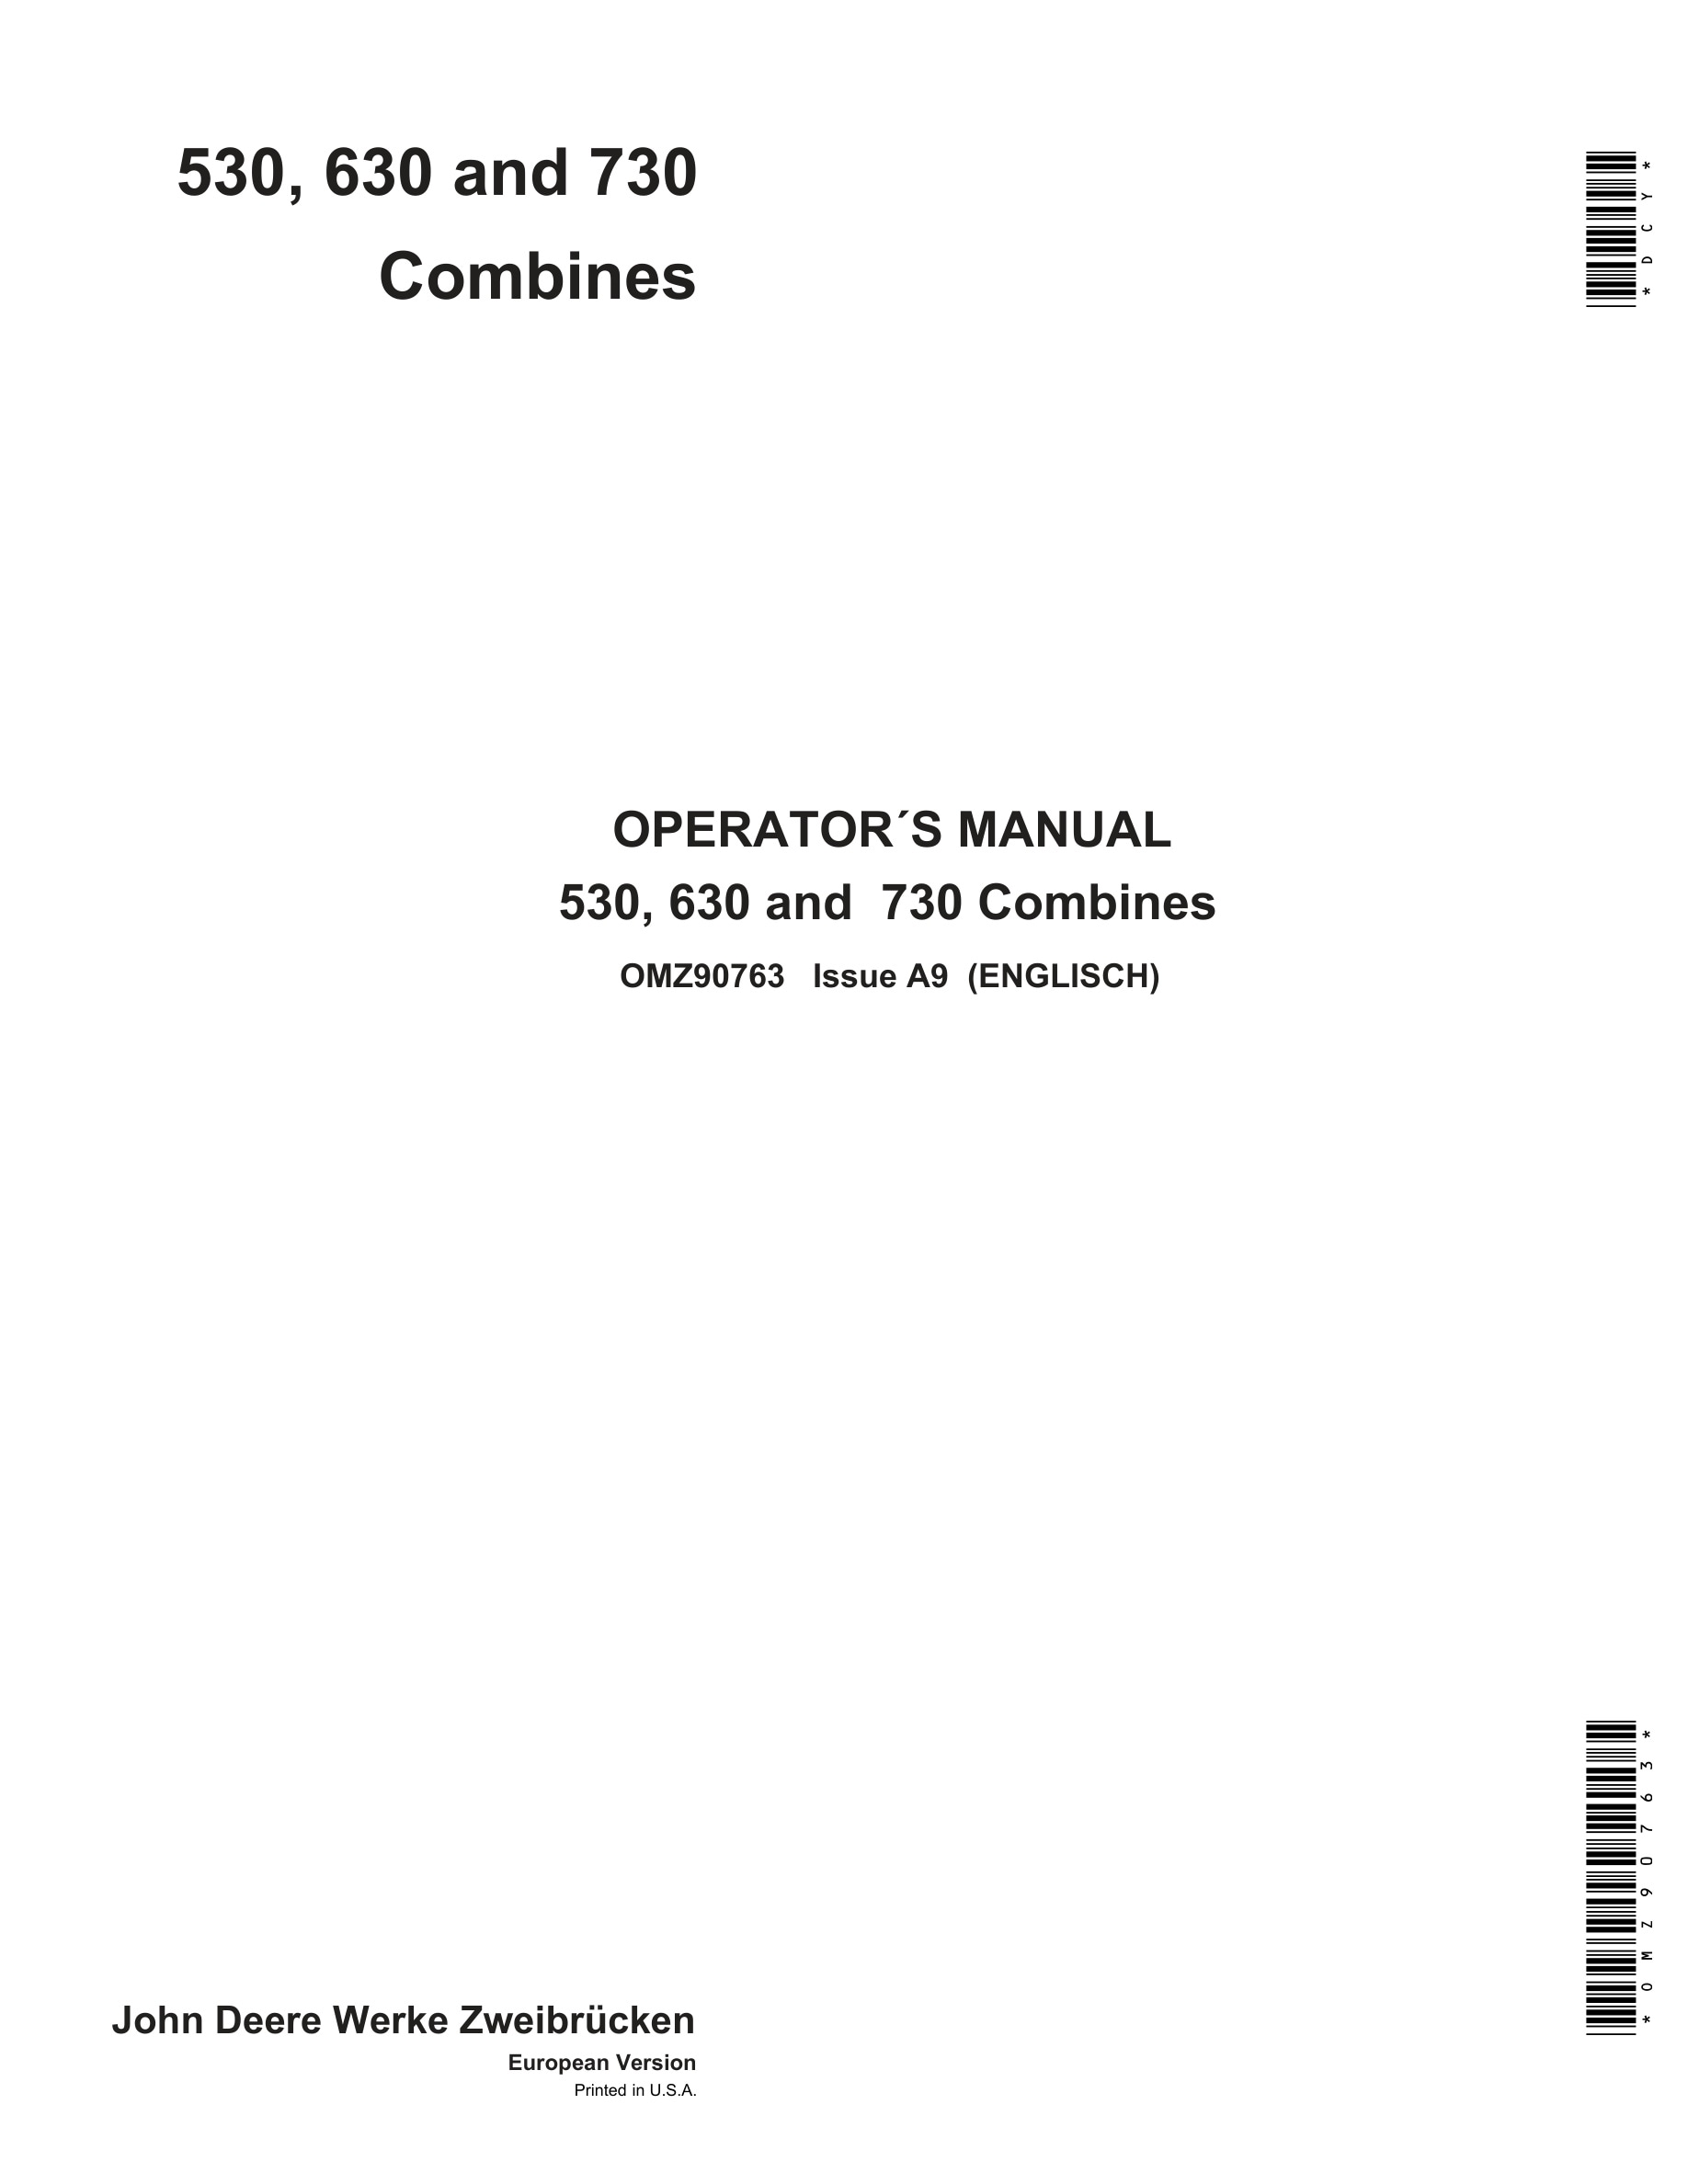 John Deere 530, 630 and 730 Combine Operator Manual OMZ90763-1